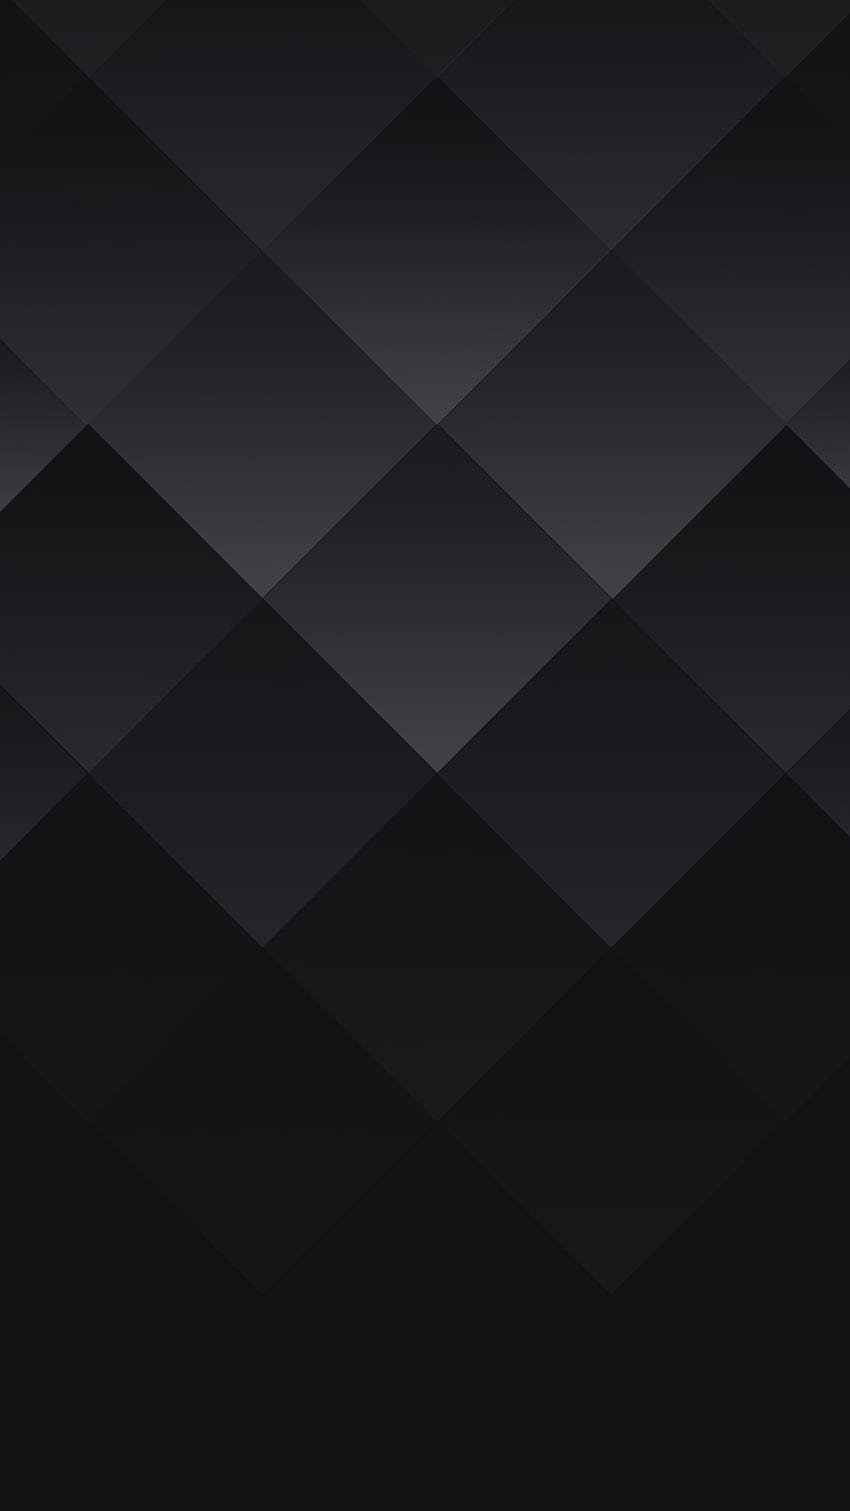 BlackBerry KEYone .png 1 440×2 560 Pixels. Papel De Parede De Madeira, Papel De Parede Android, Papel De Parede Celular, Dark Pixel HD phone wallpaper